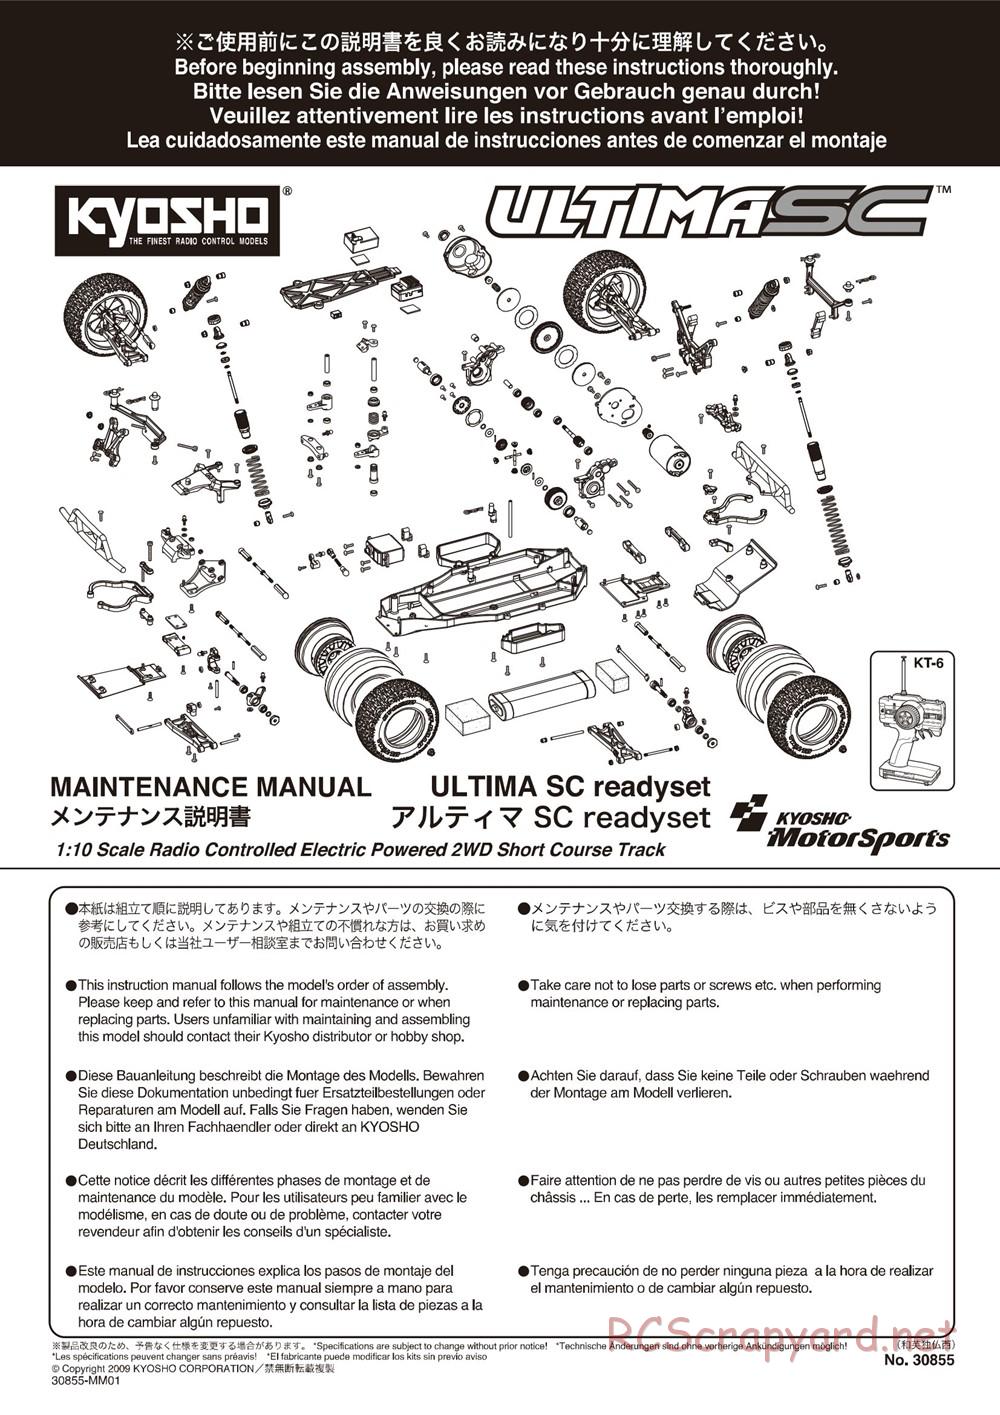 Kyosho - Ultima-SC - Manual - Page 1